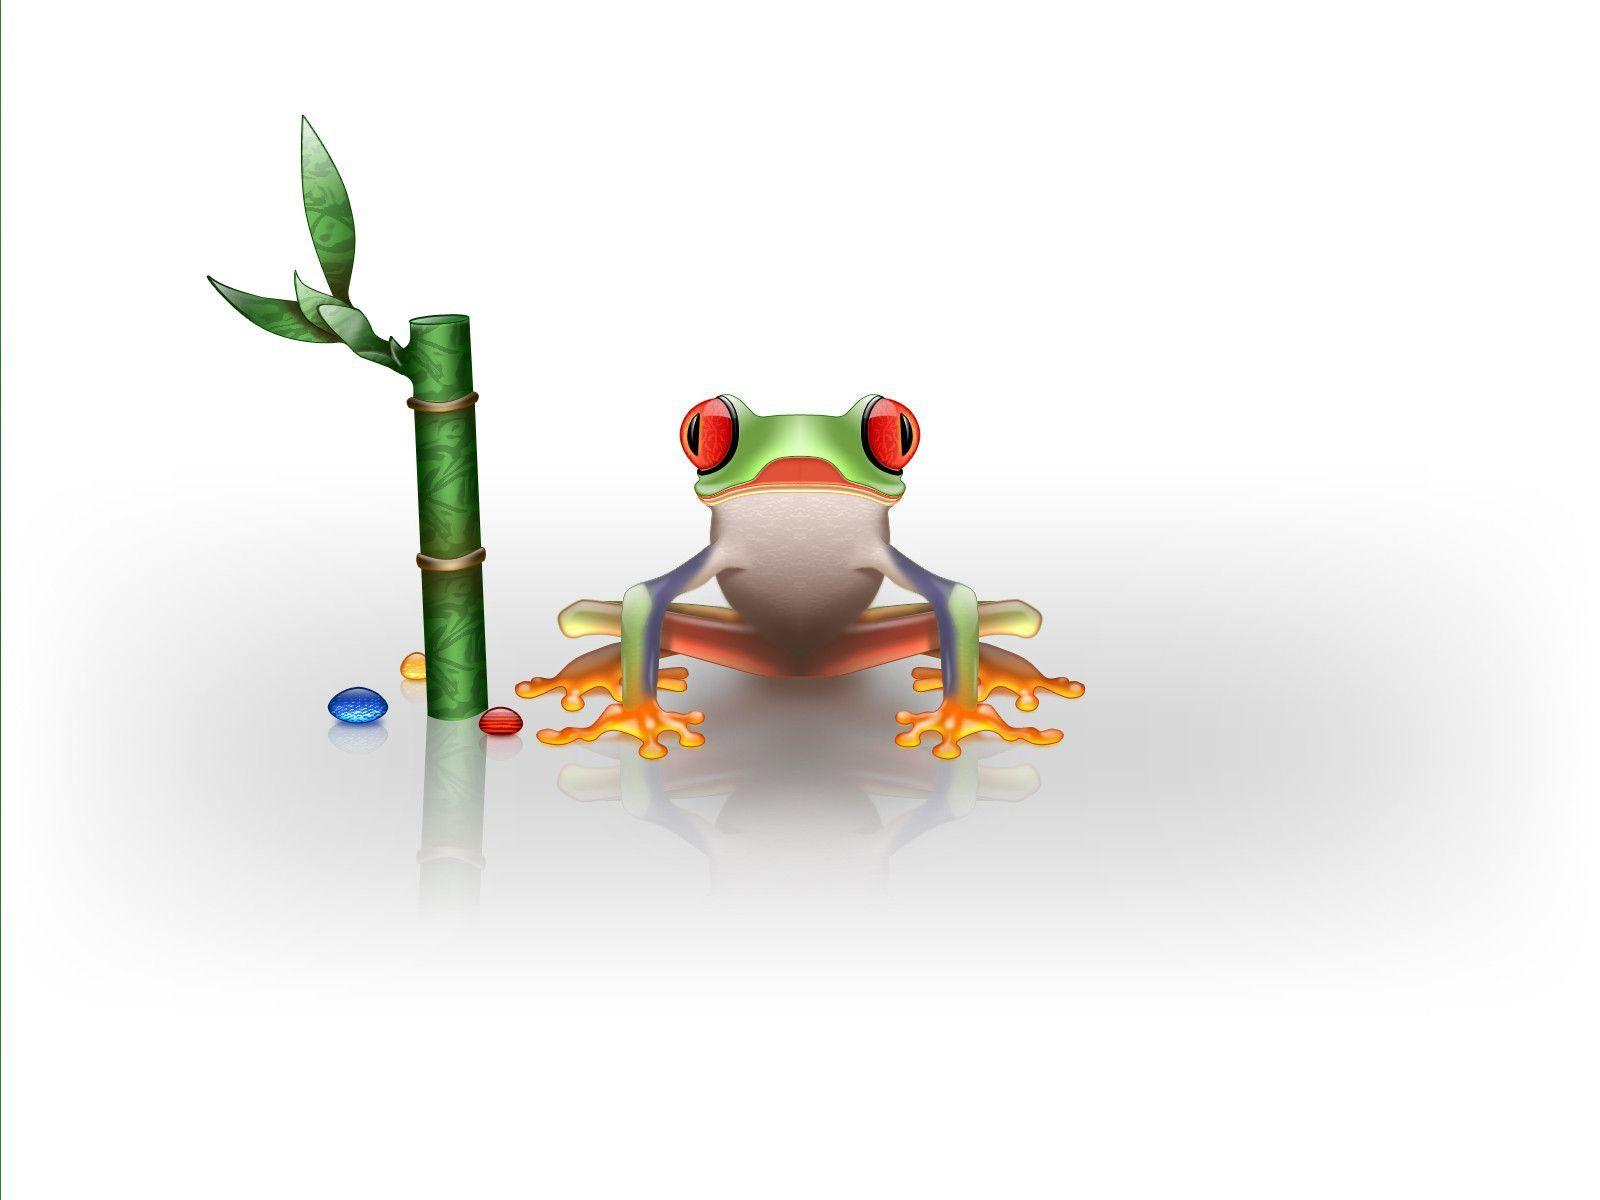 Free Frog Wallpaper